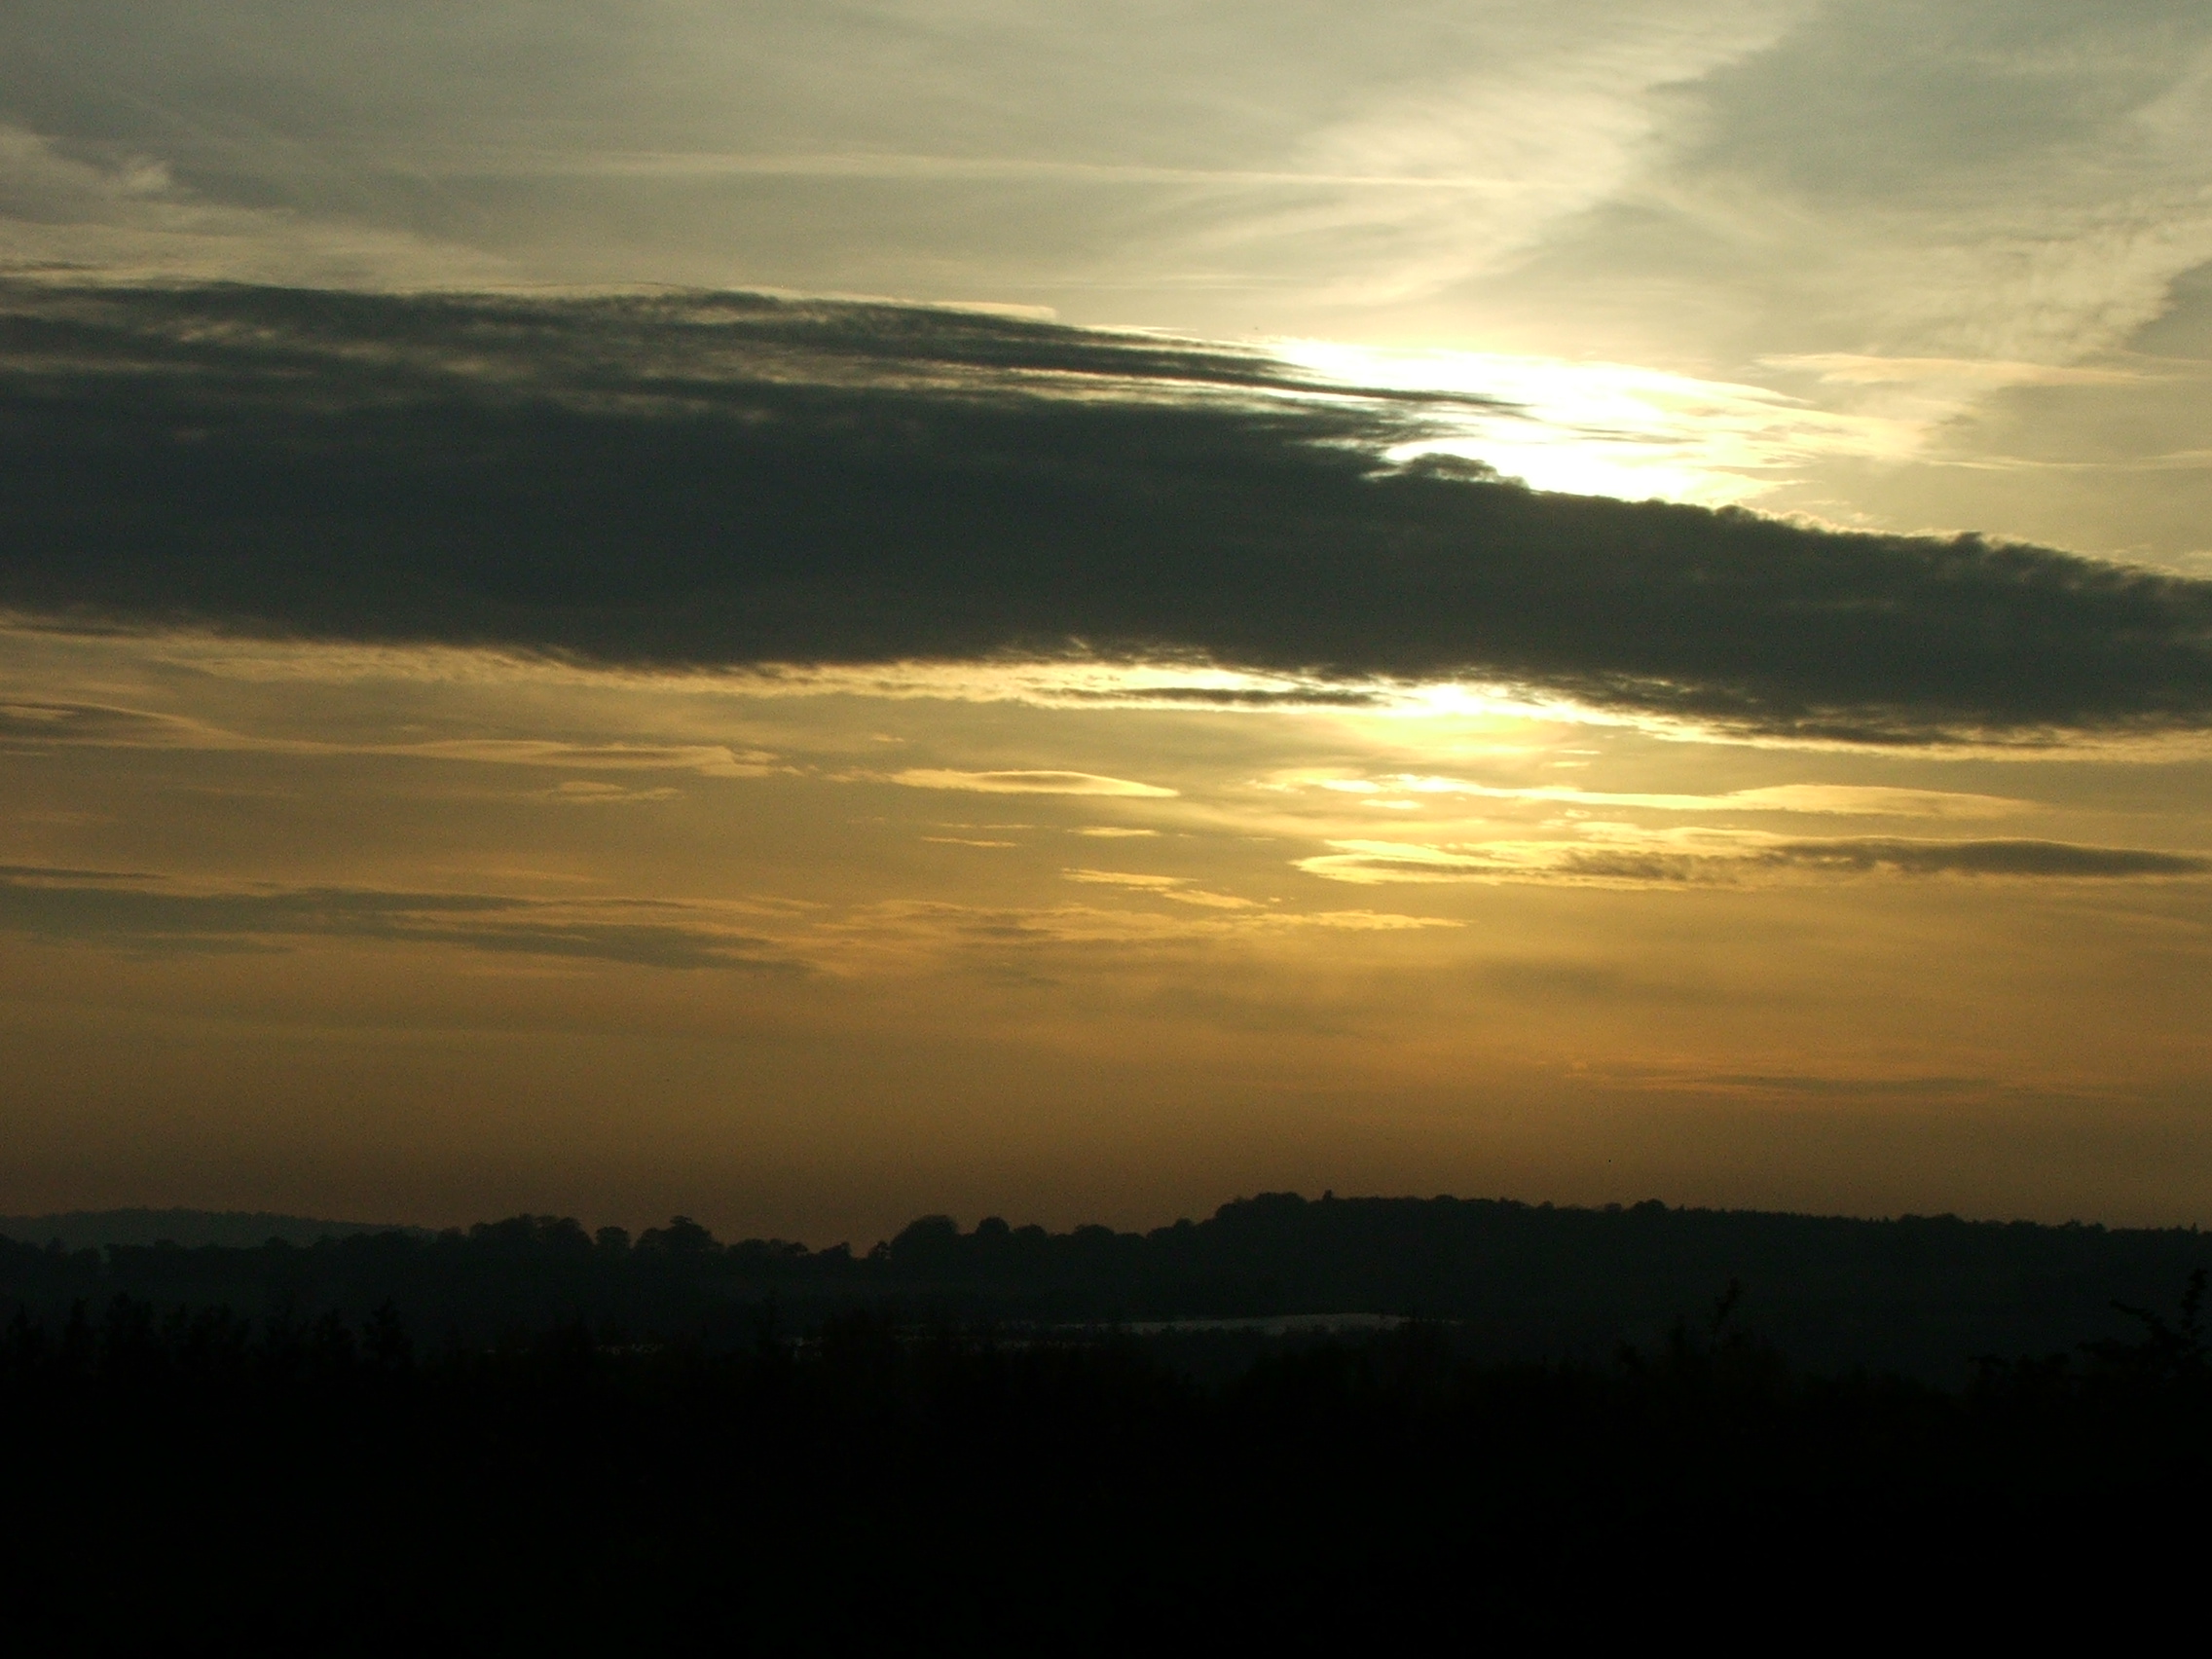 Sunset over Royden